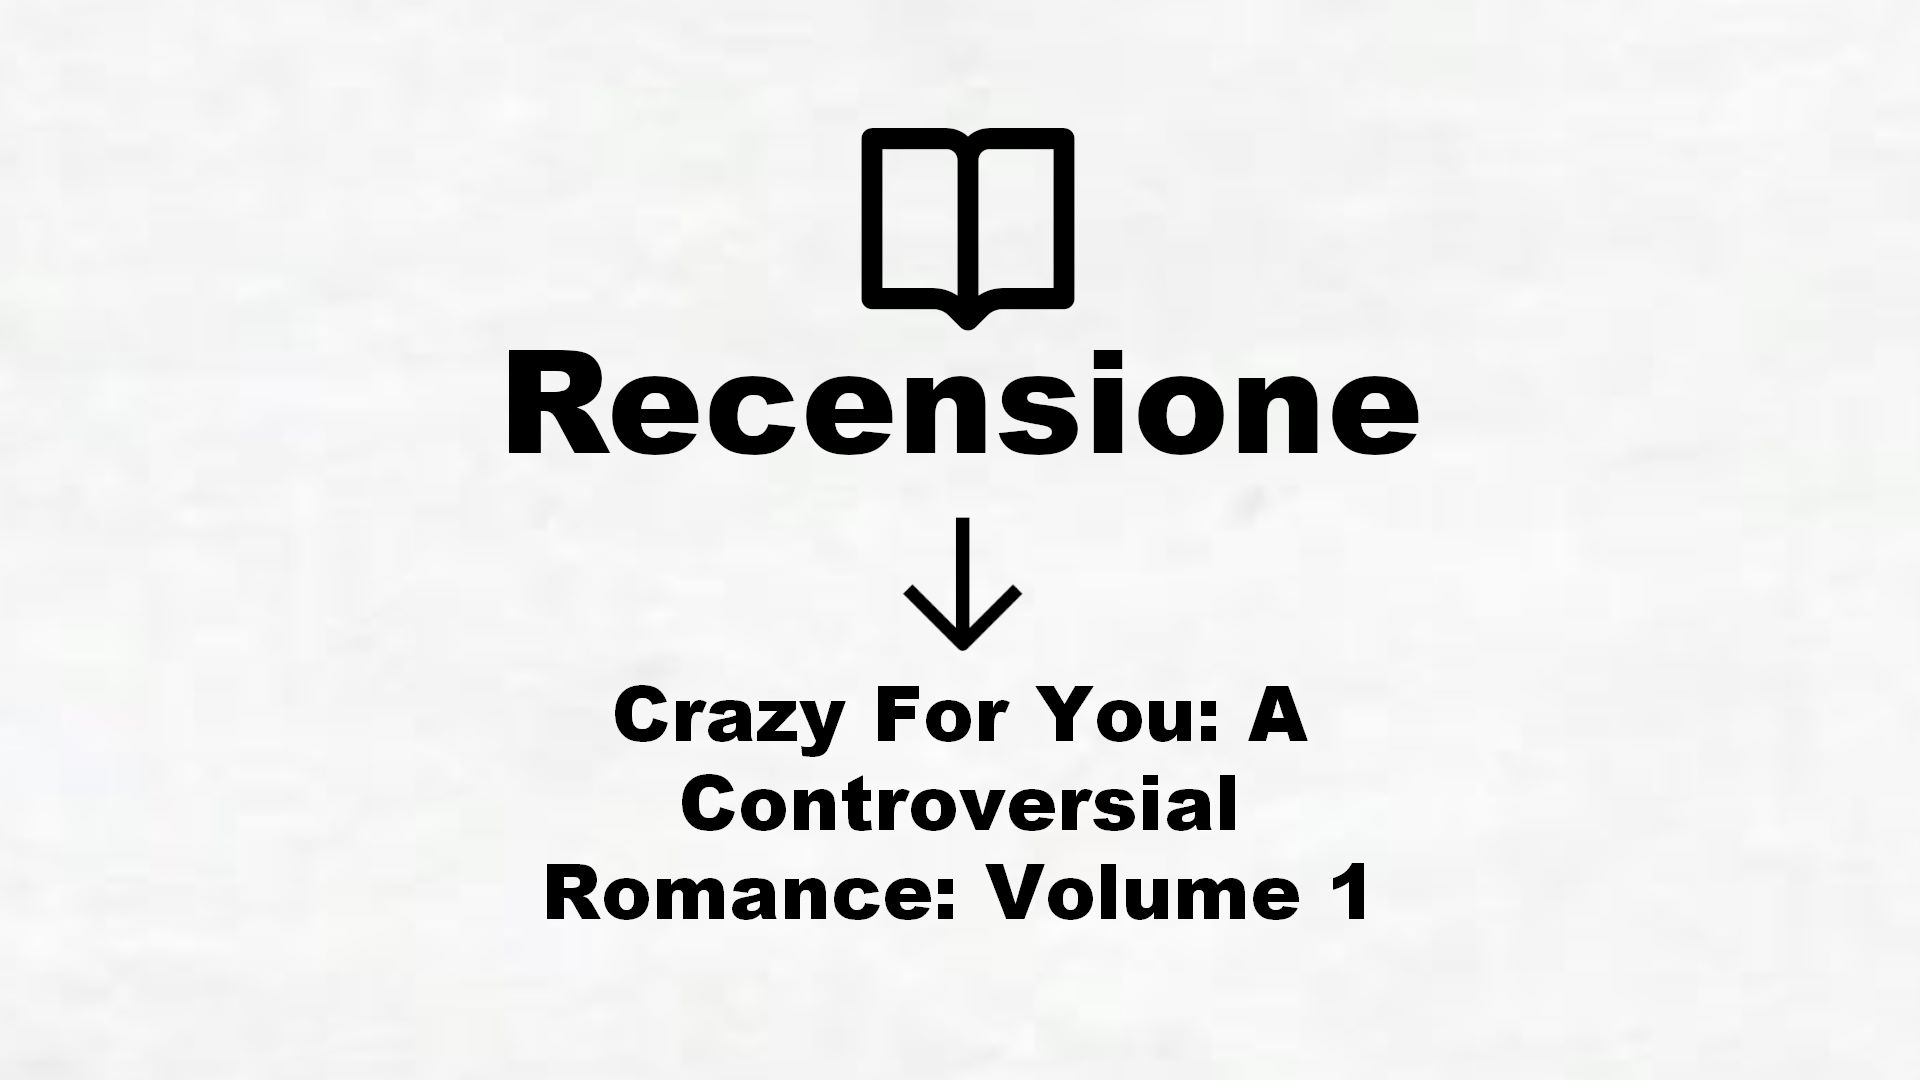 Crazy For You: A Controversial Romance: Volume 1 – Recensione Libro